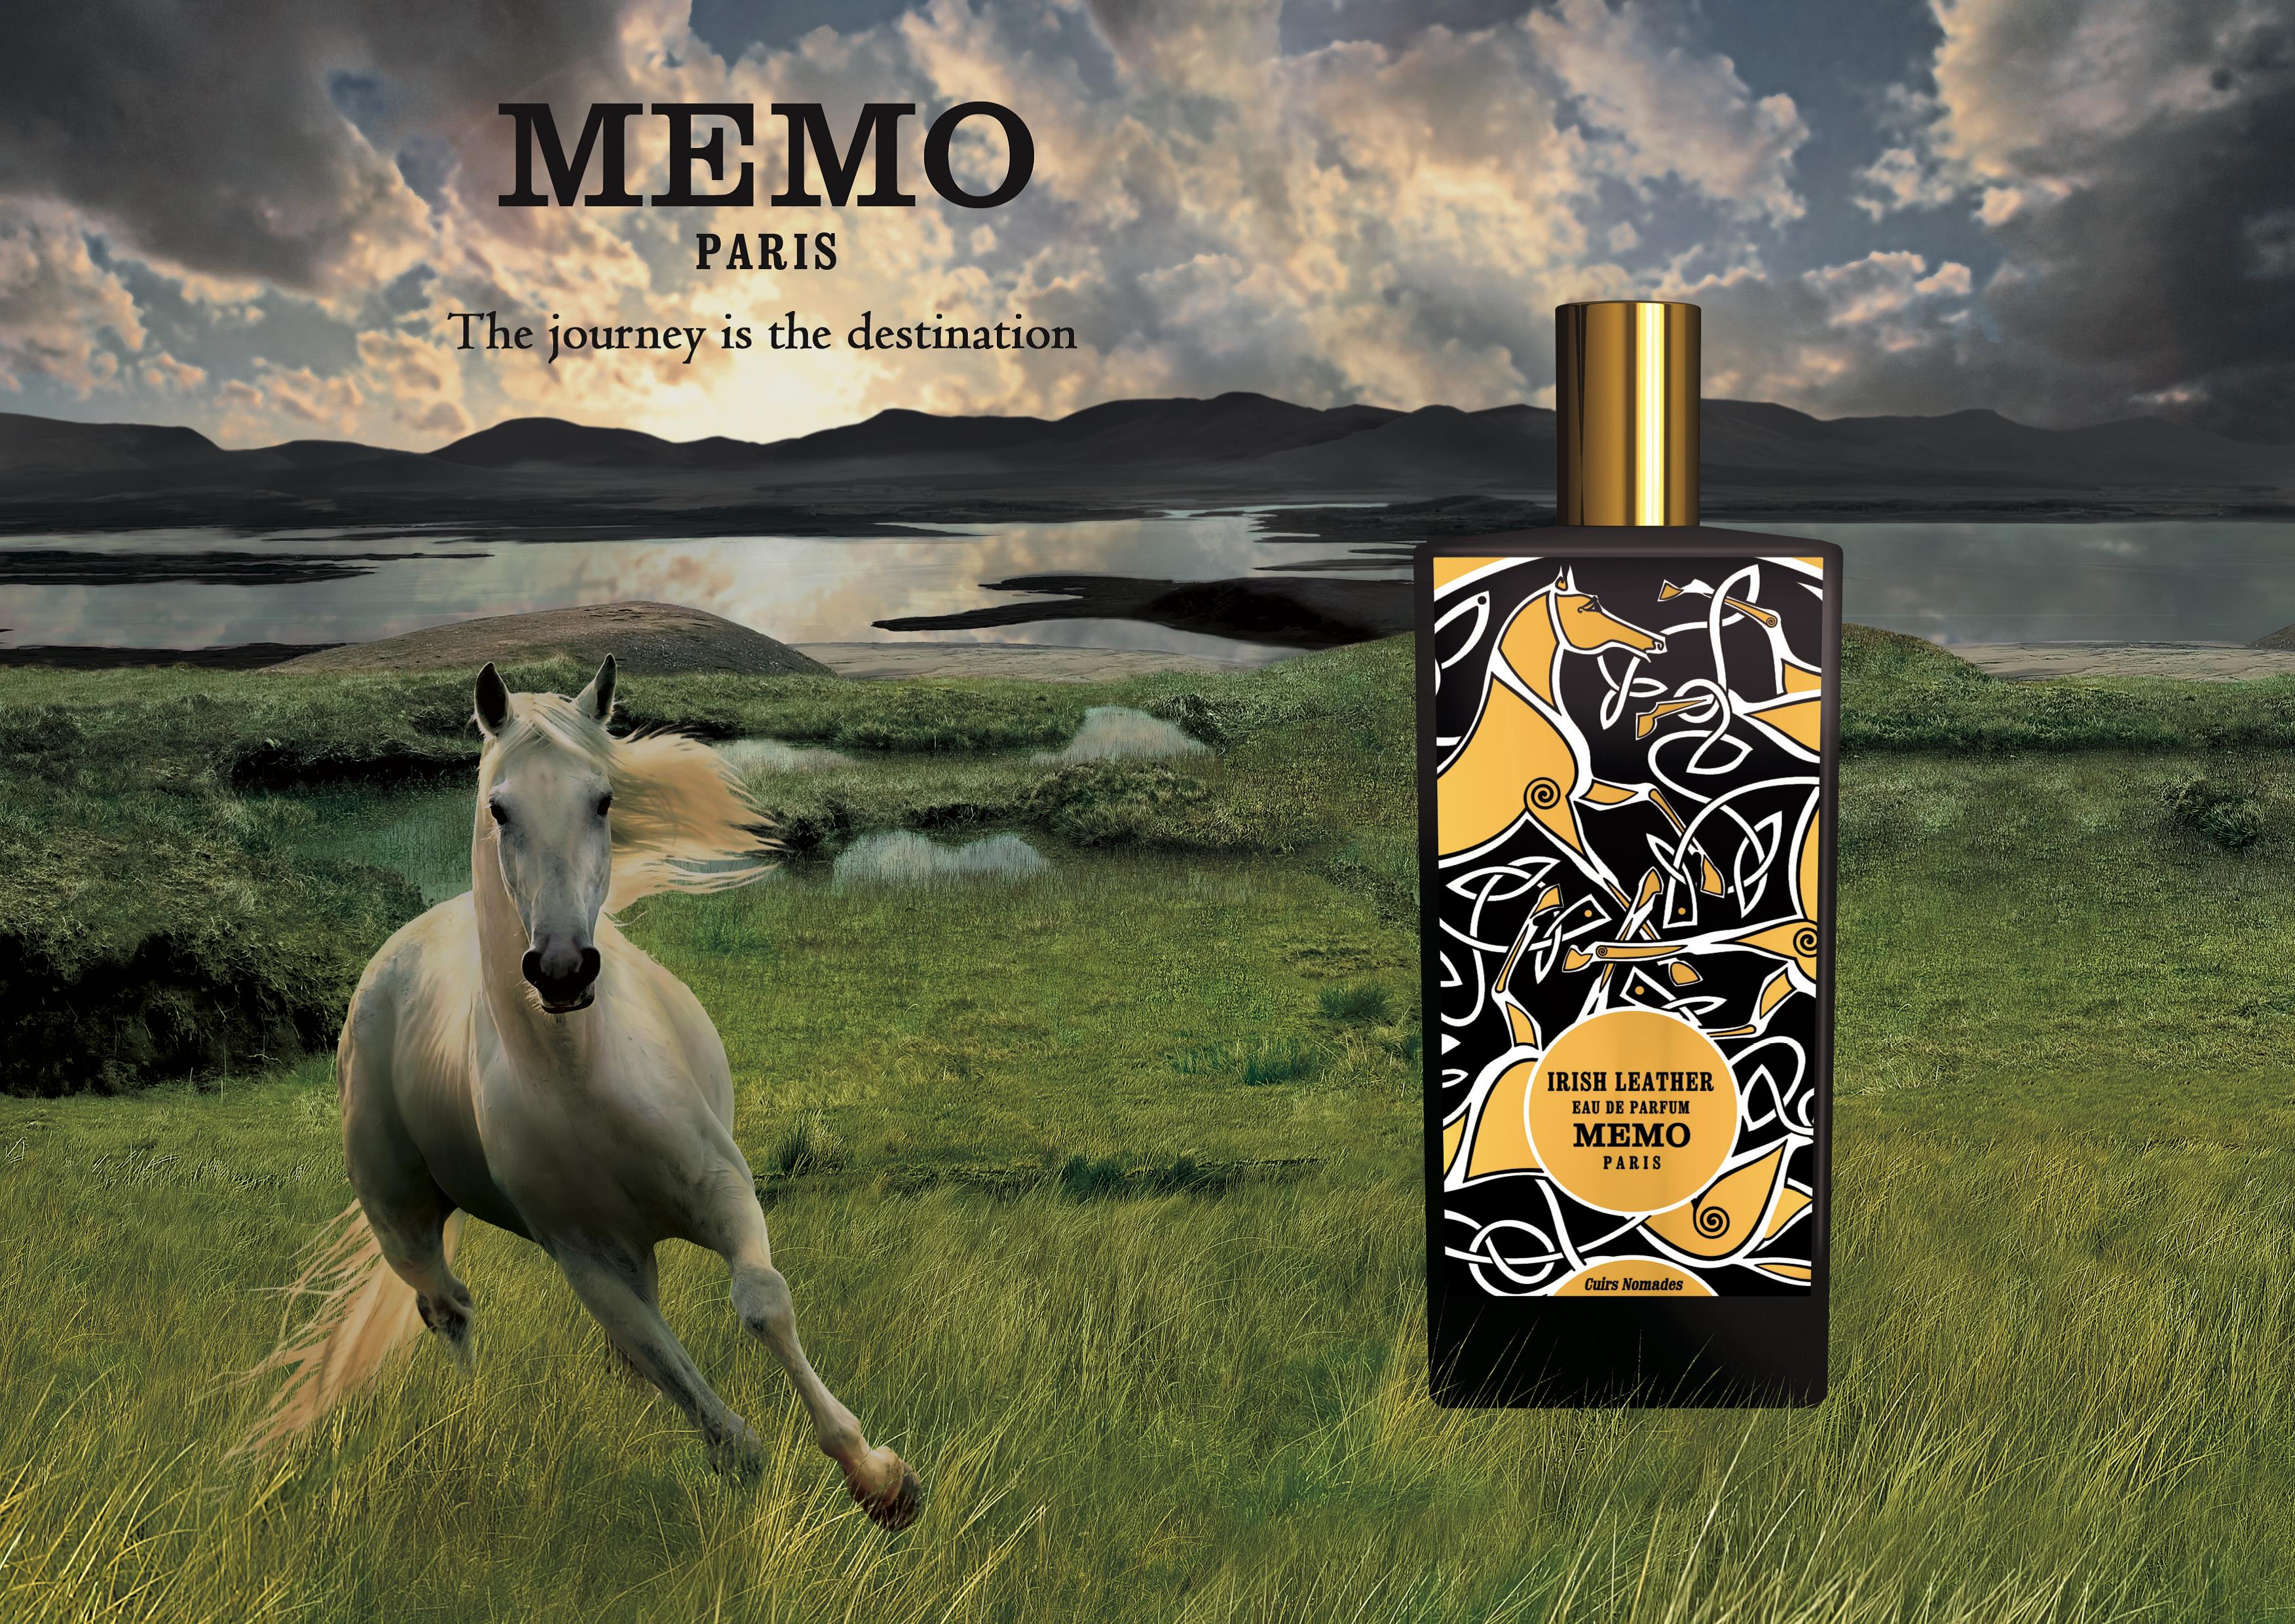 Irish Leather Memo Paris for women and men horse nature Irish commercial poster at doğa.jpg